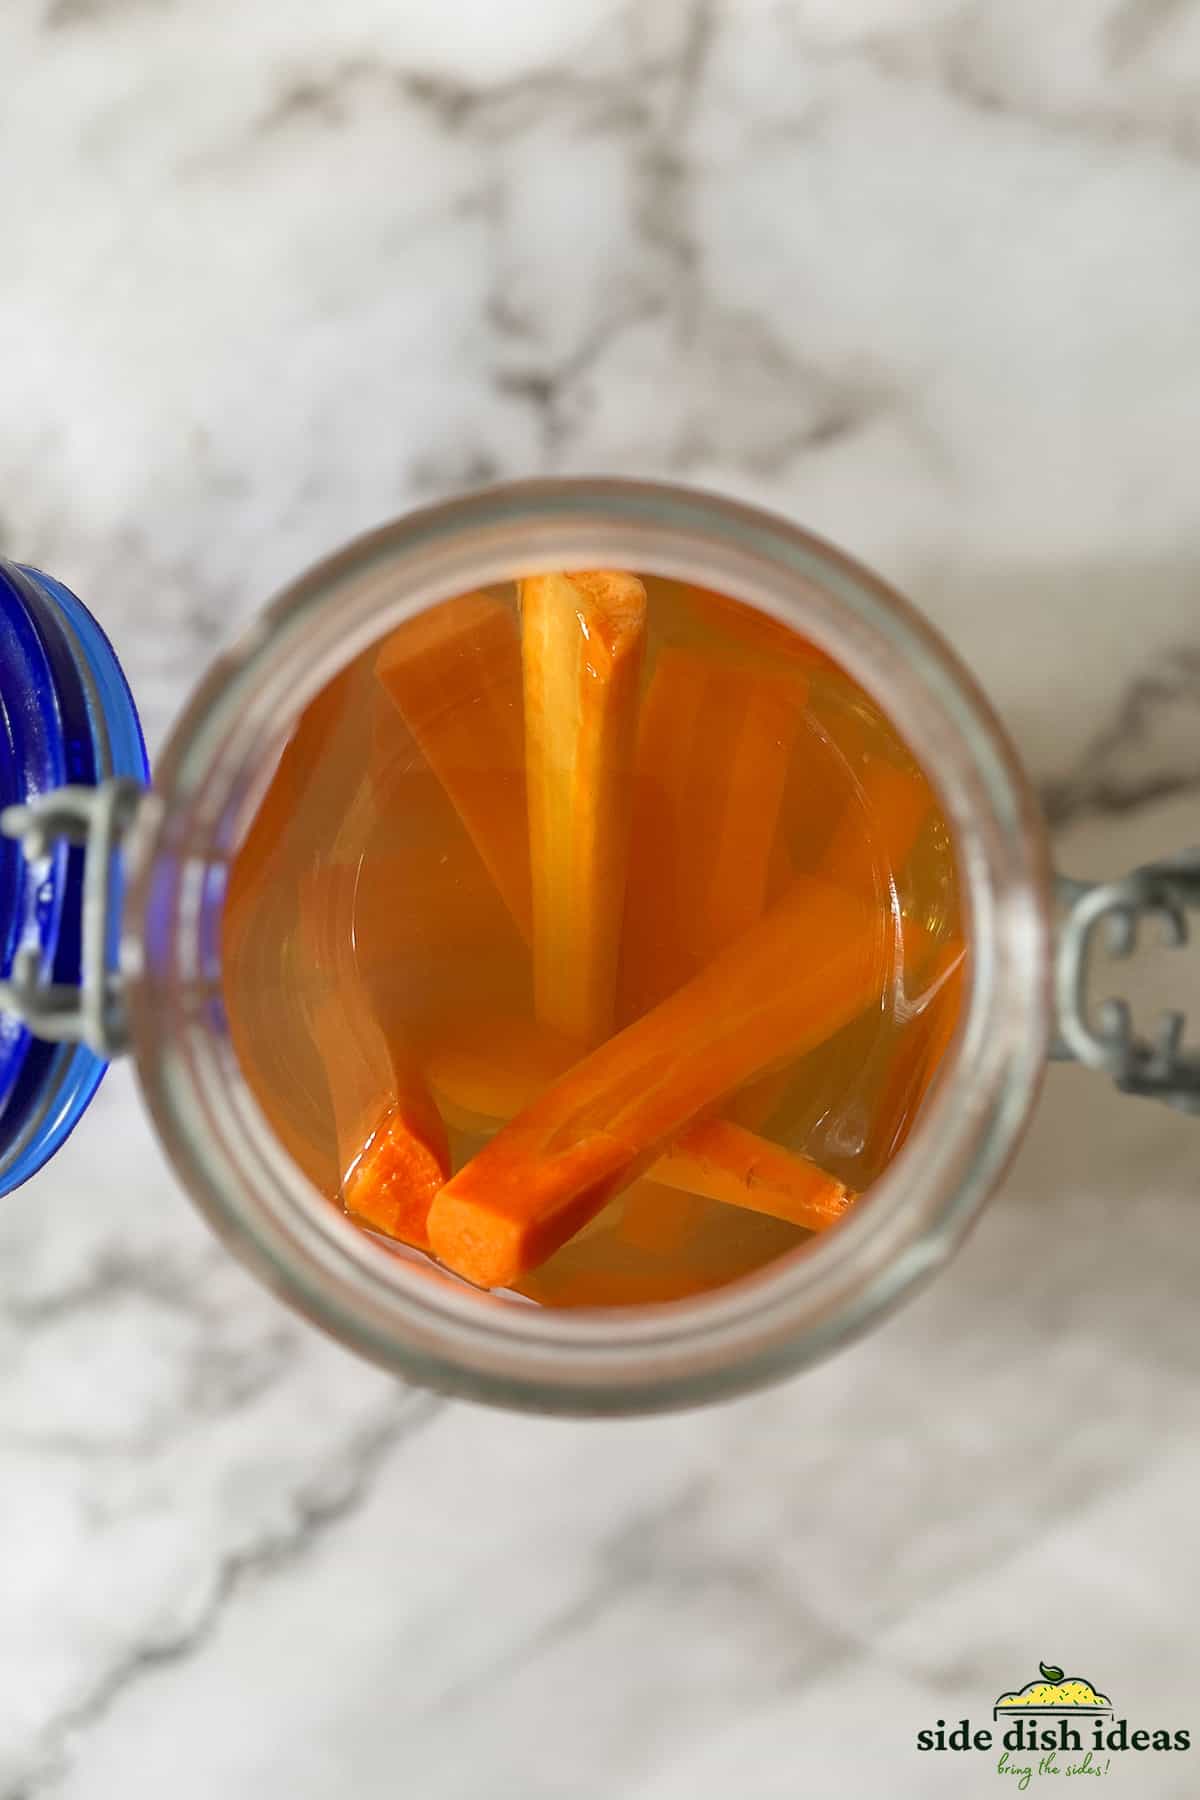 pickled carrots inside a glass jar